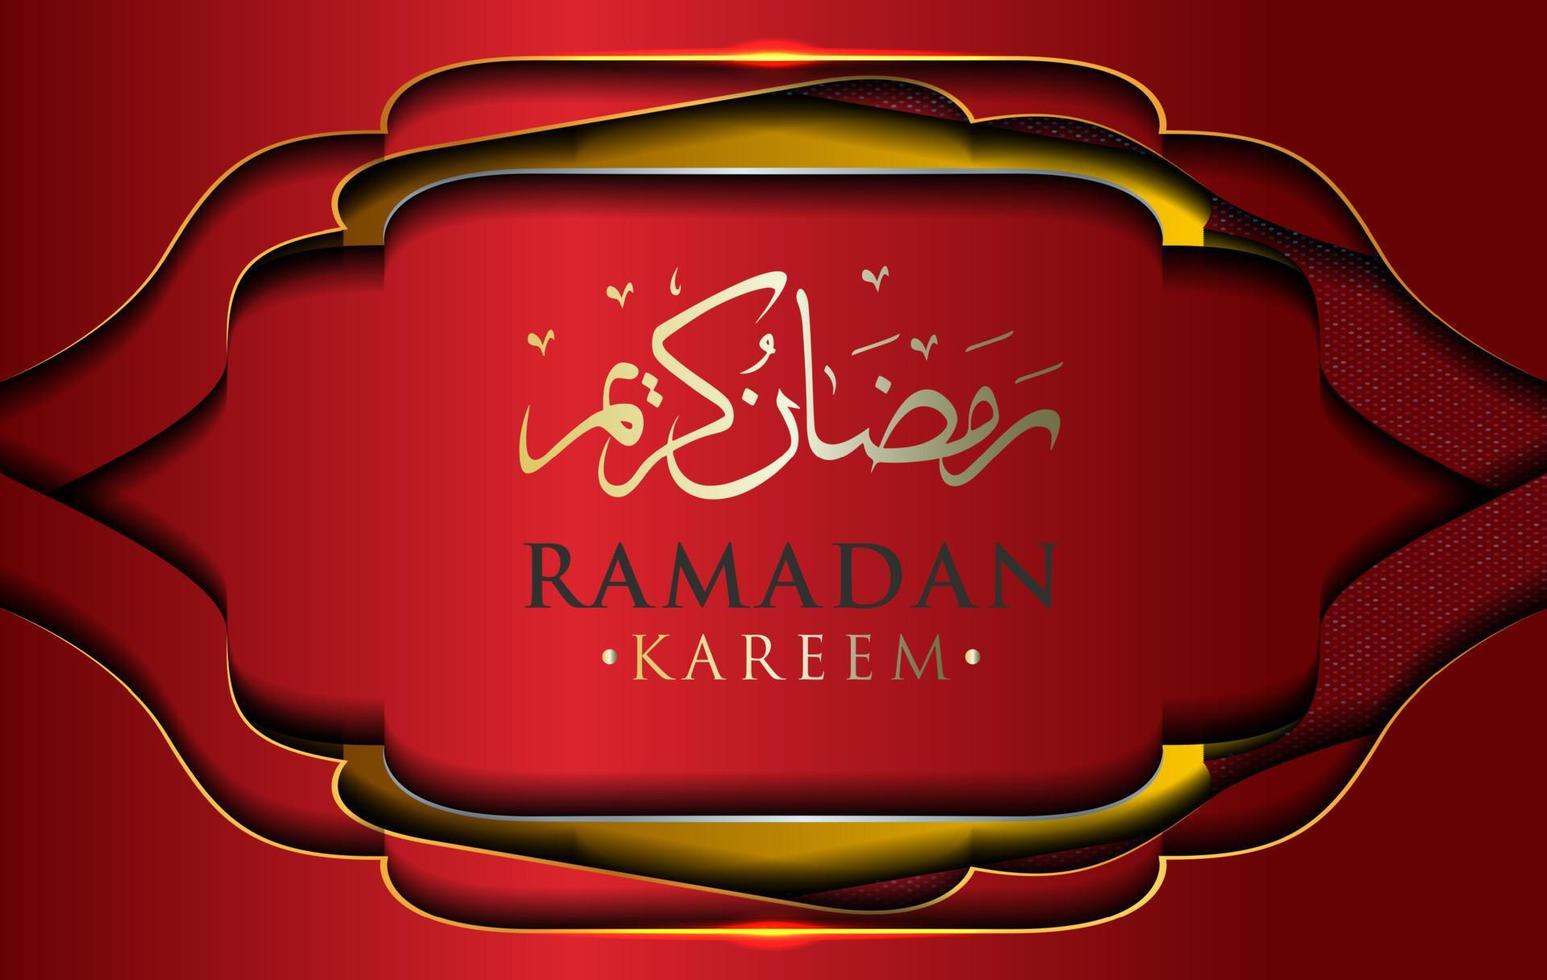 Ramadan kareem dans luxe style avec arabe calligraphie vecteur